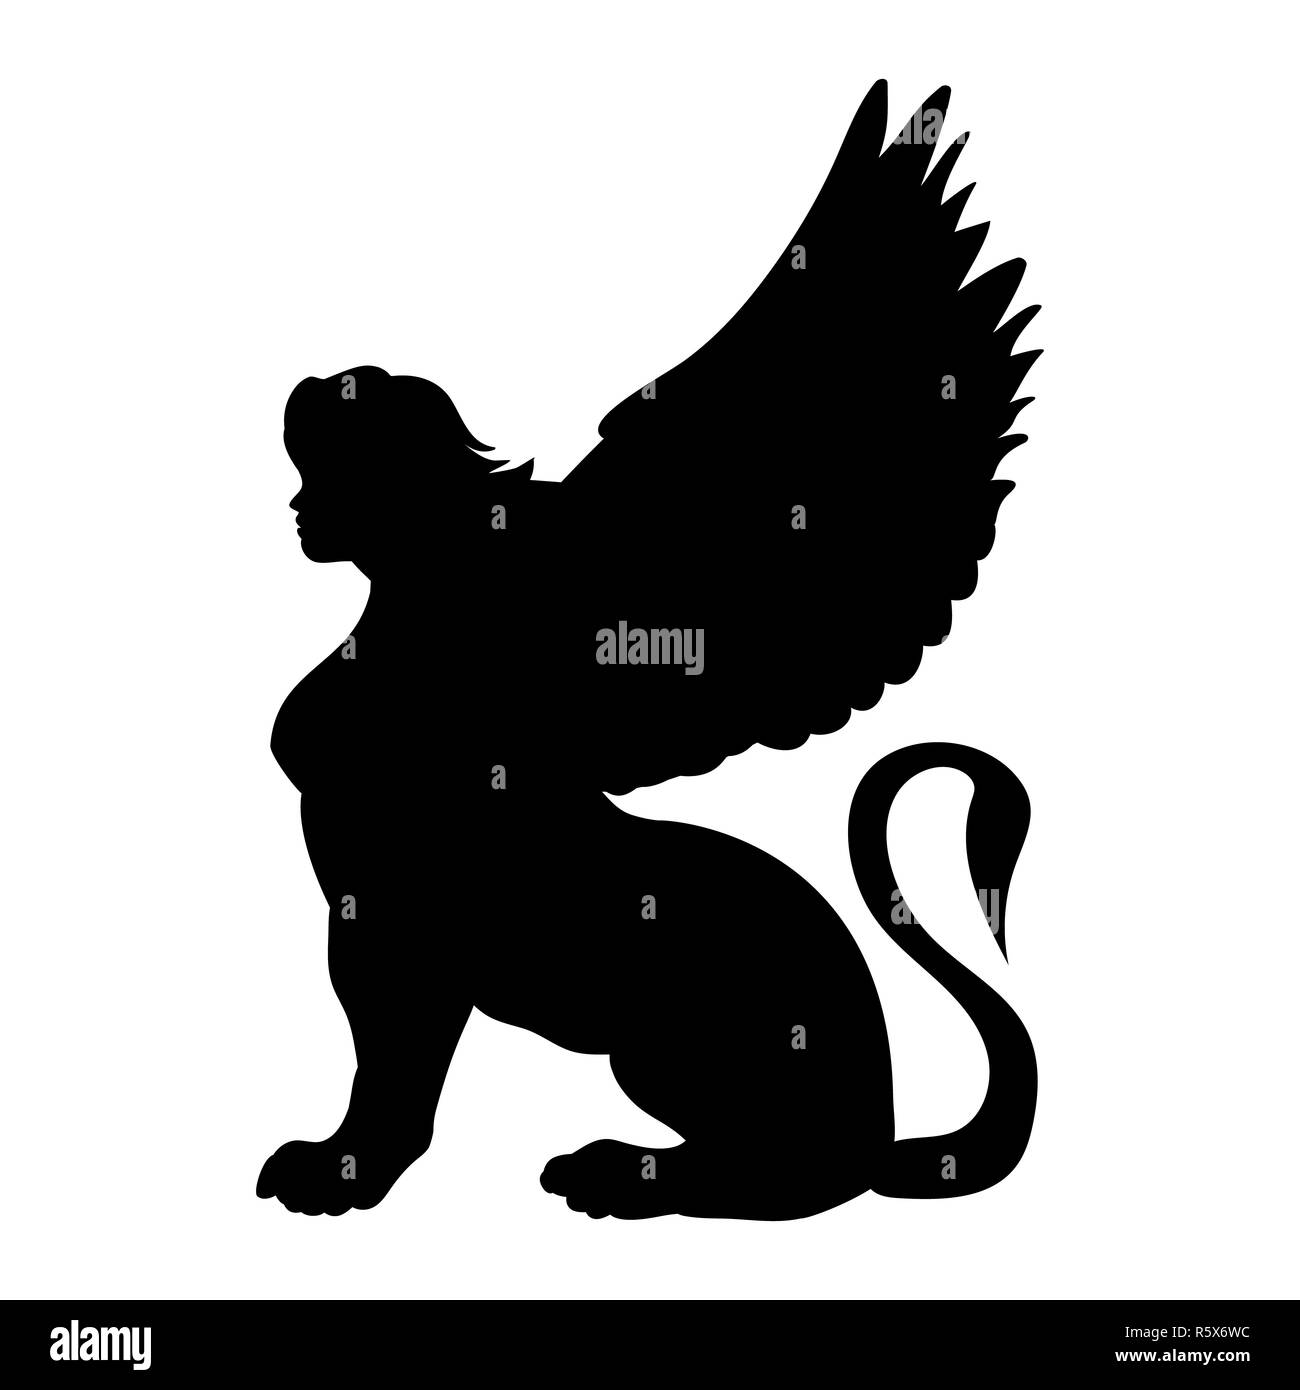 Sphinx silhouette ancient egyptian mythology fantasy. Stock Photo